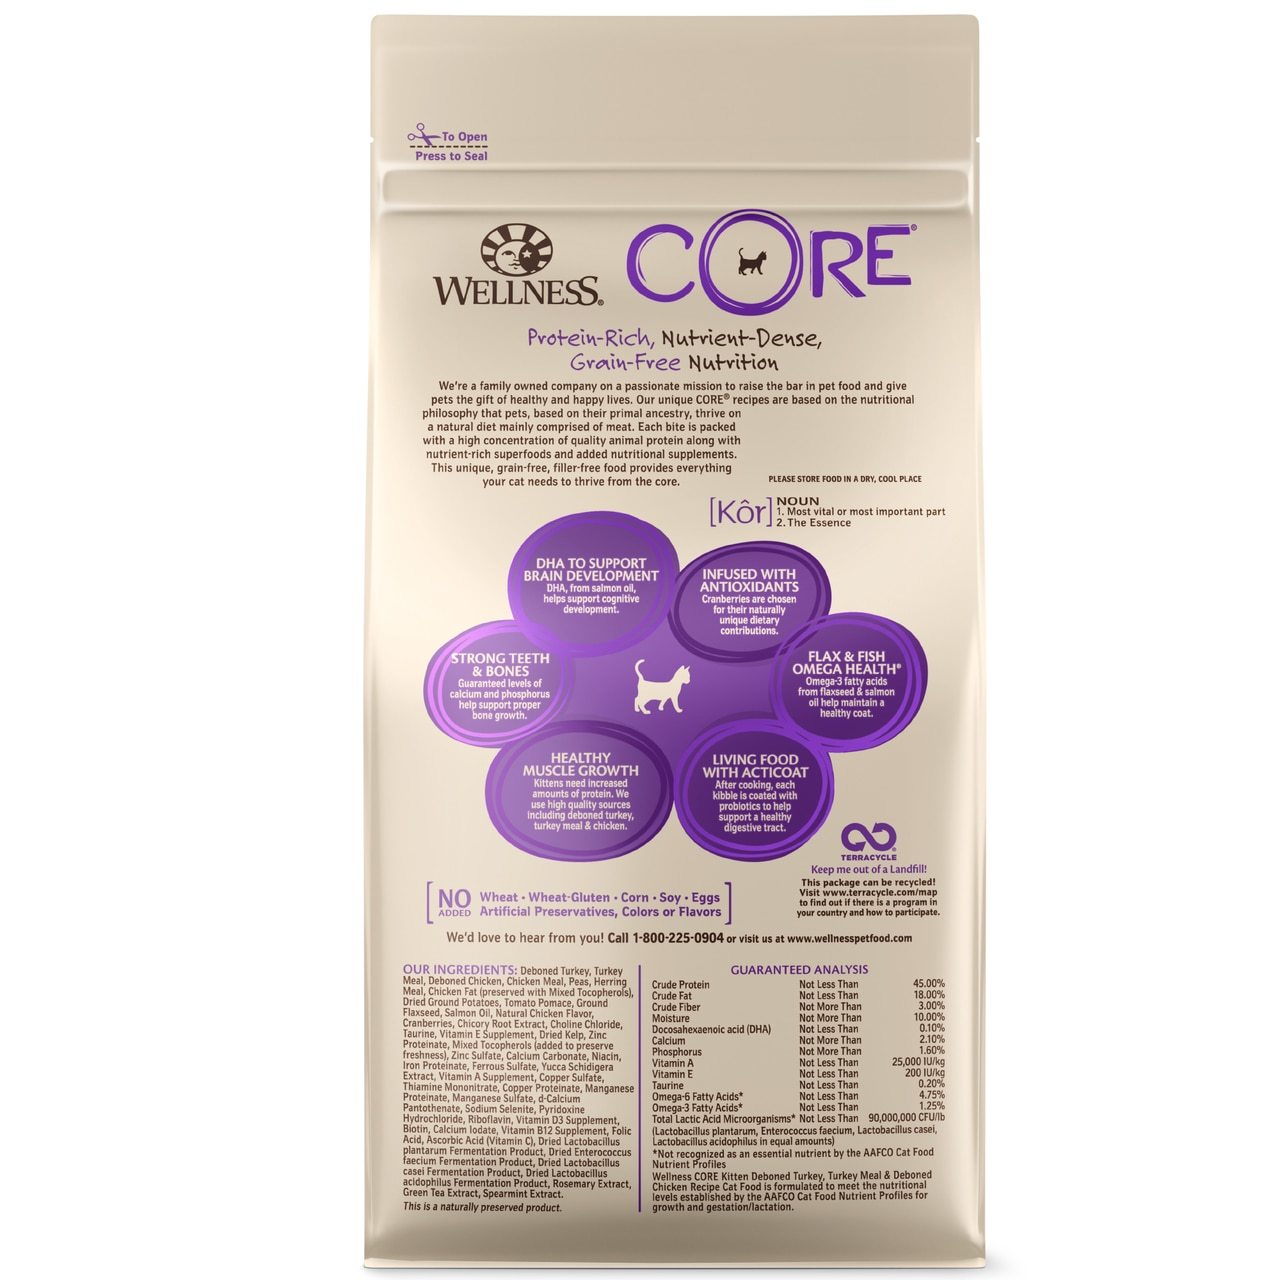 Wellness Core Natural Grain Free Dry Kitten Food, Kitten Turkey & Deboned Chicken Recipe, 2-lb Bag image number null